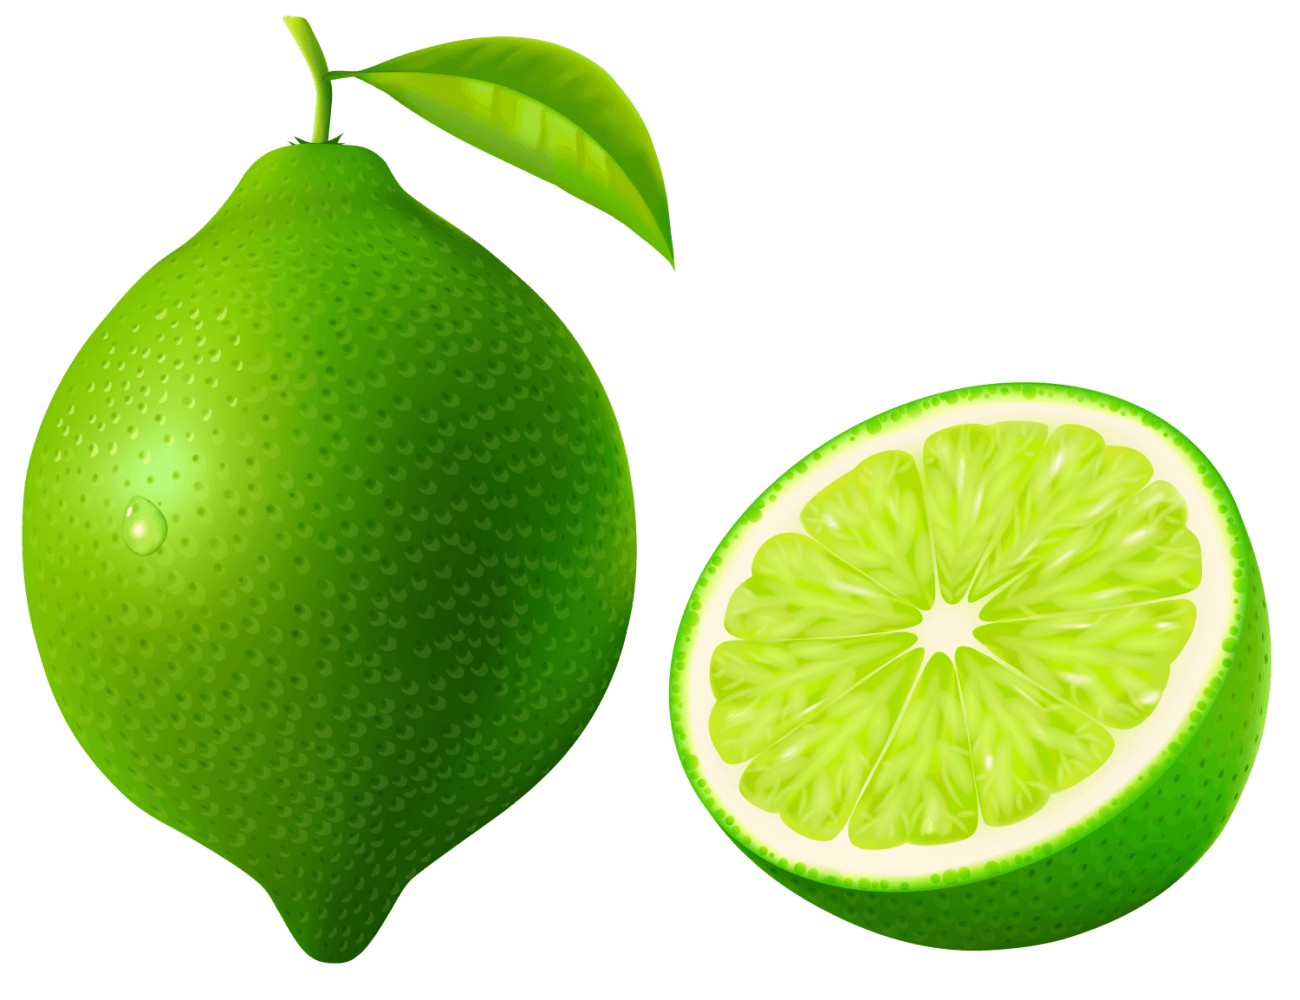 A lime